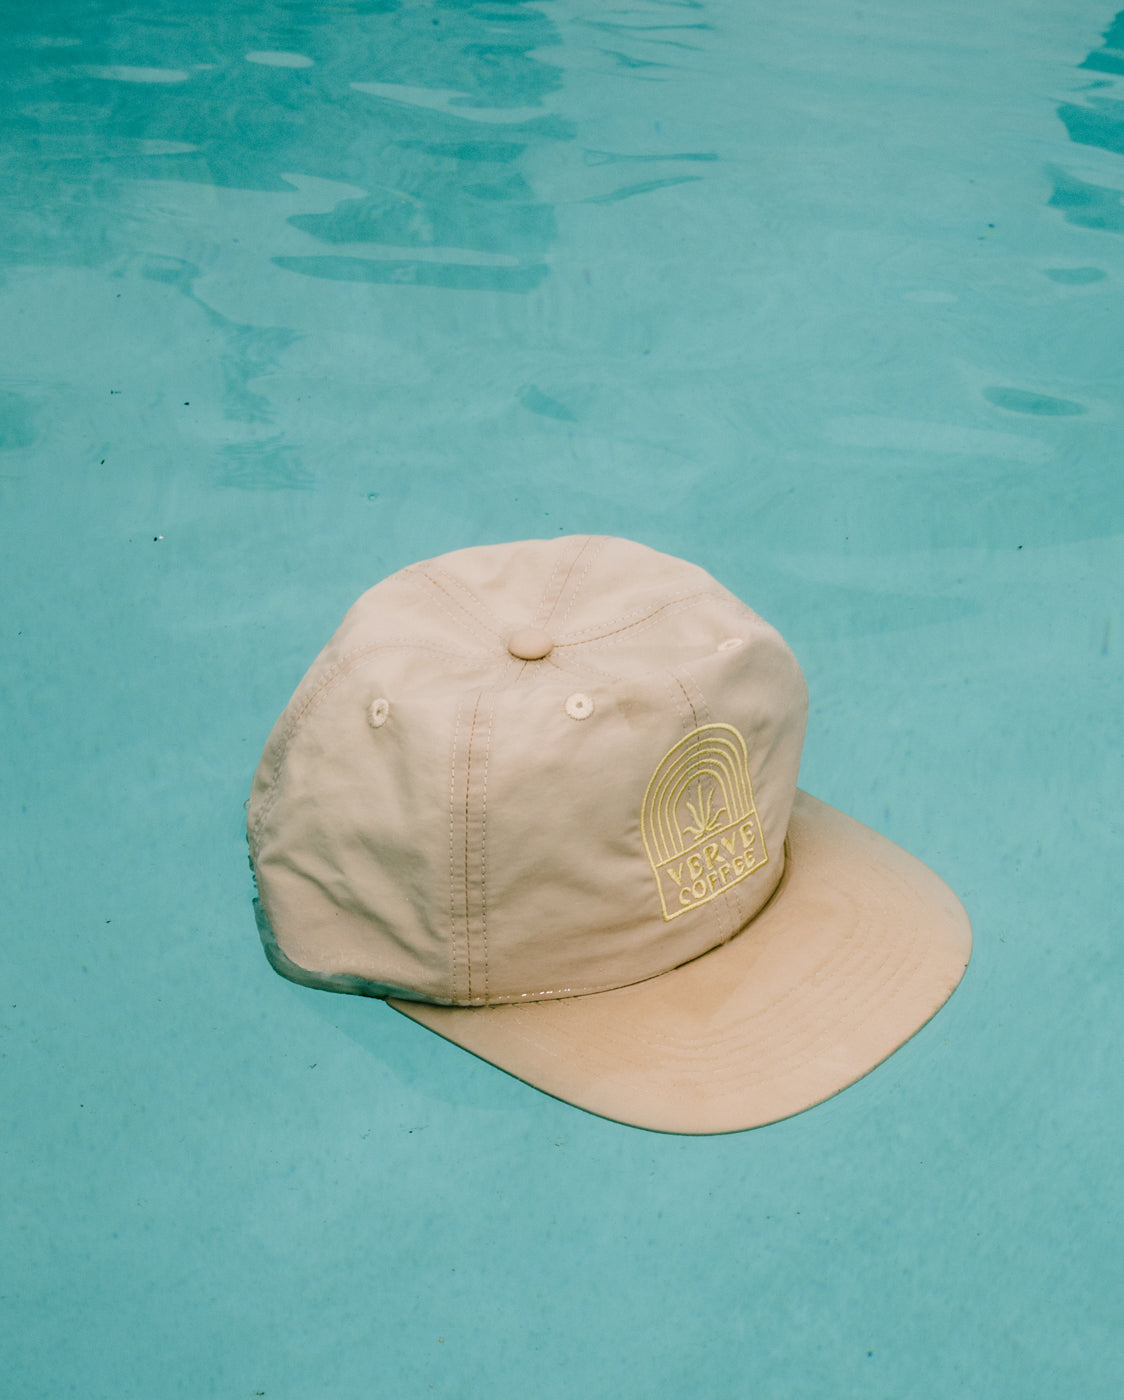 Sunburst Stitch Cap styled on a pool